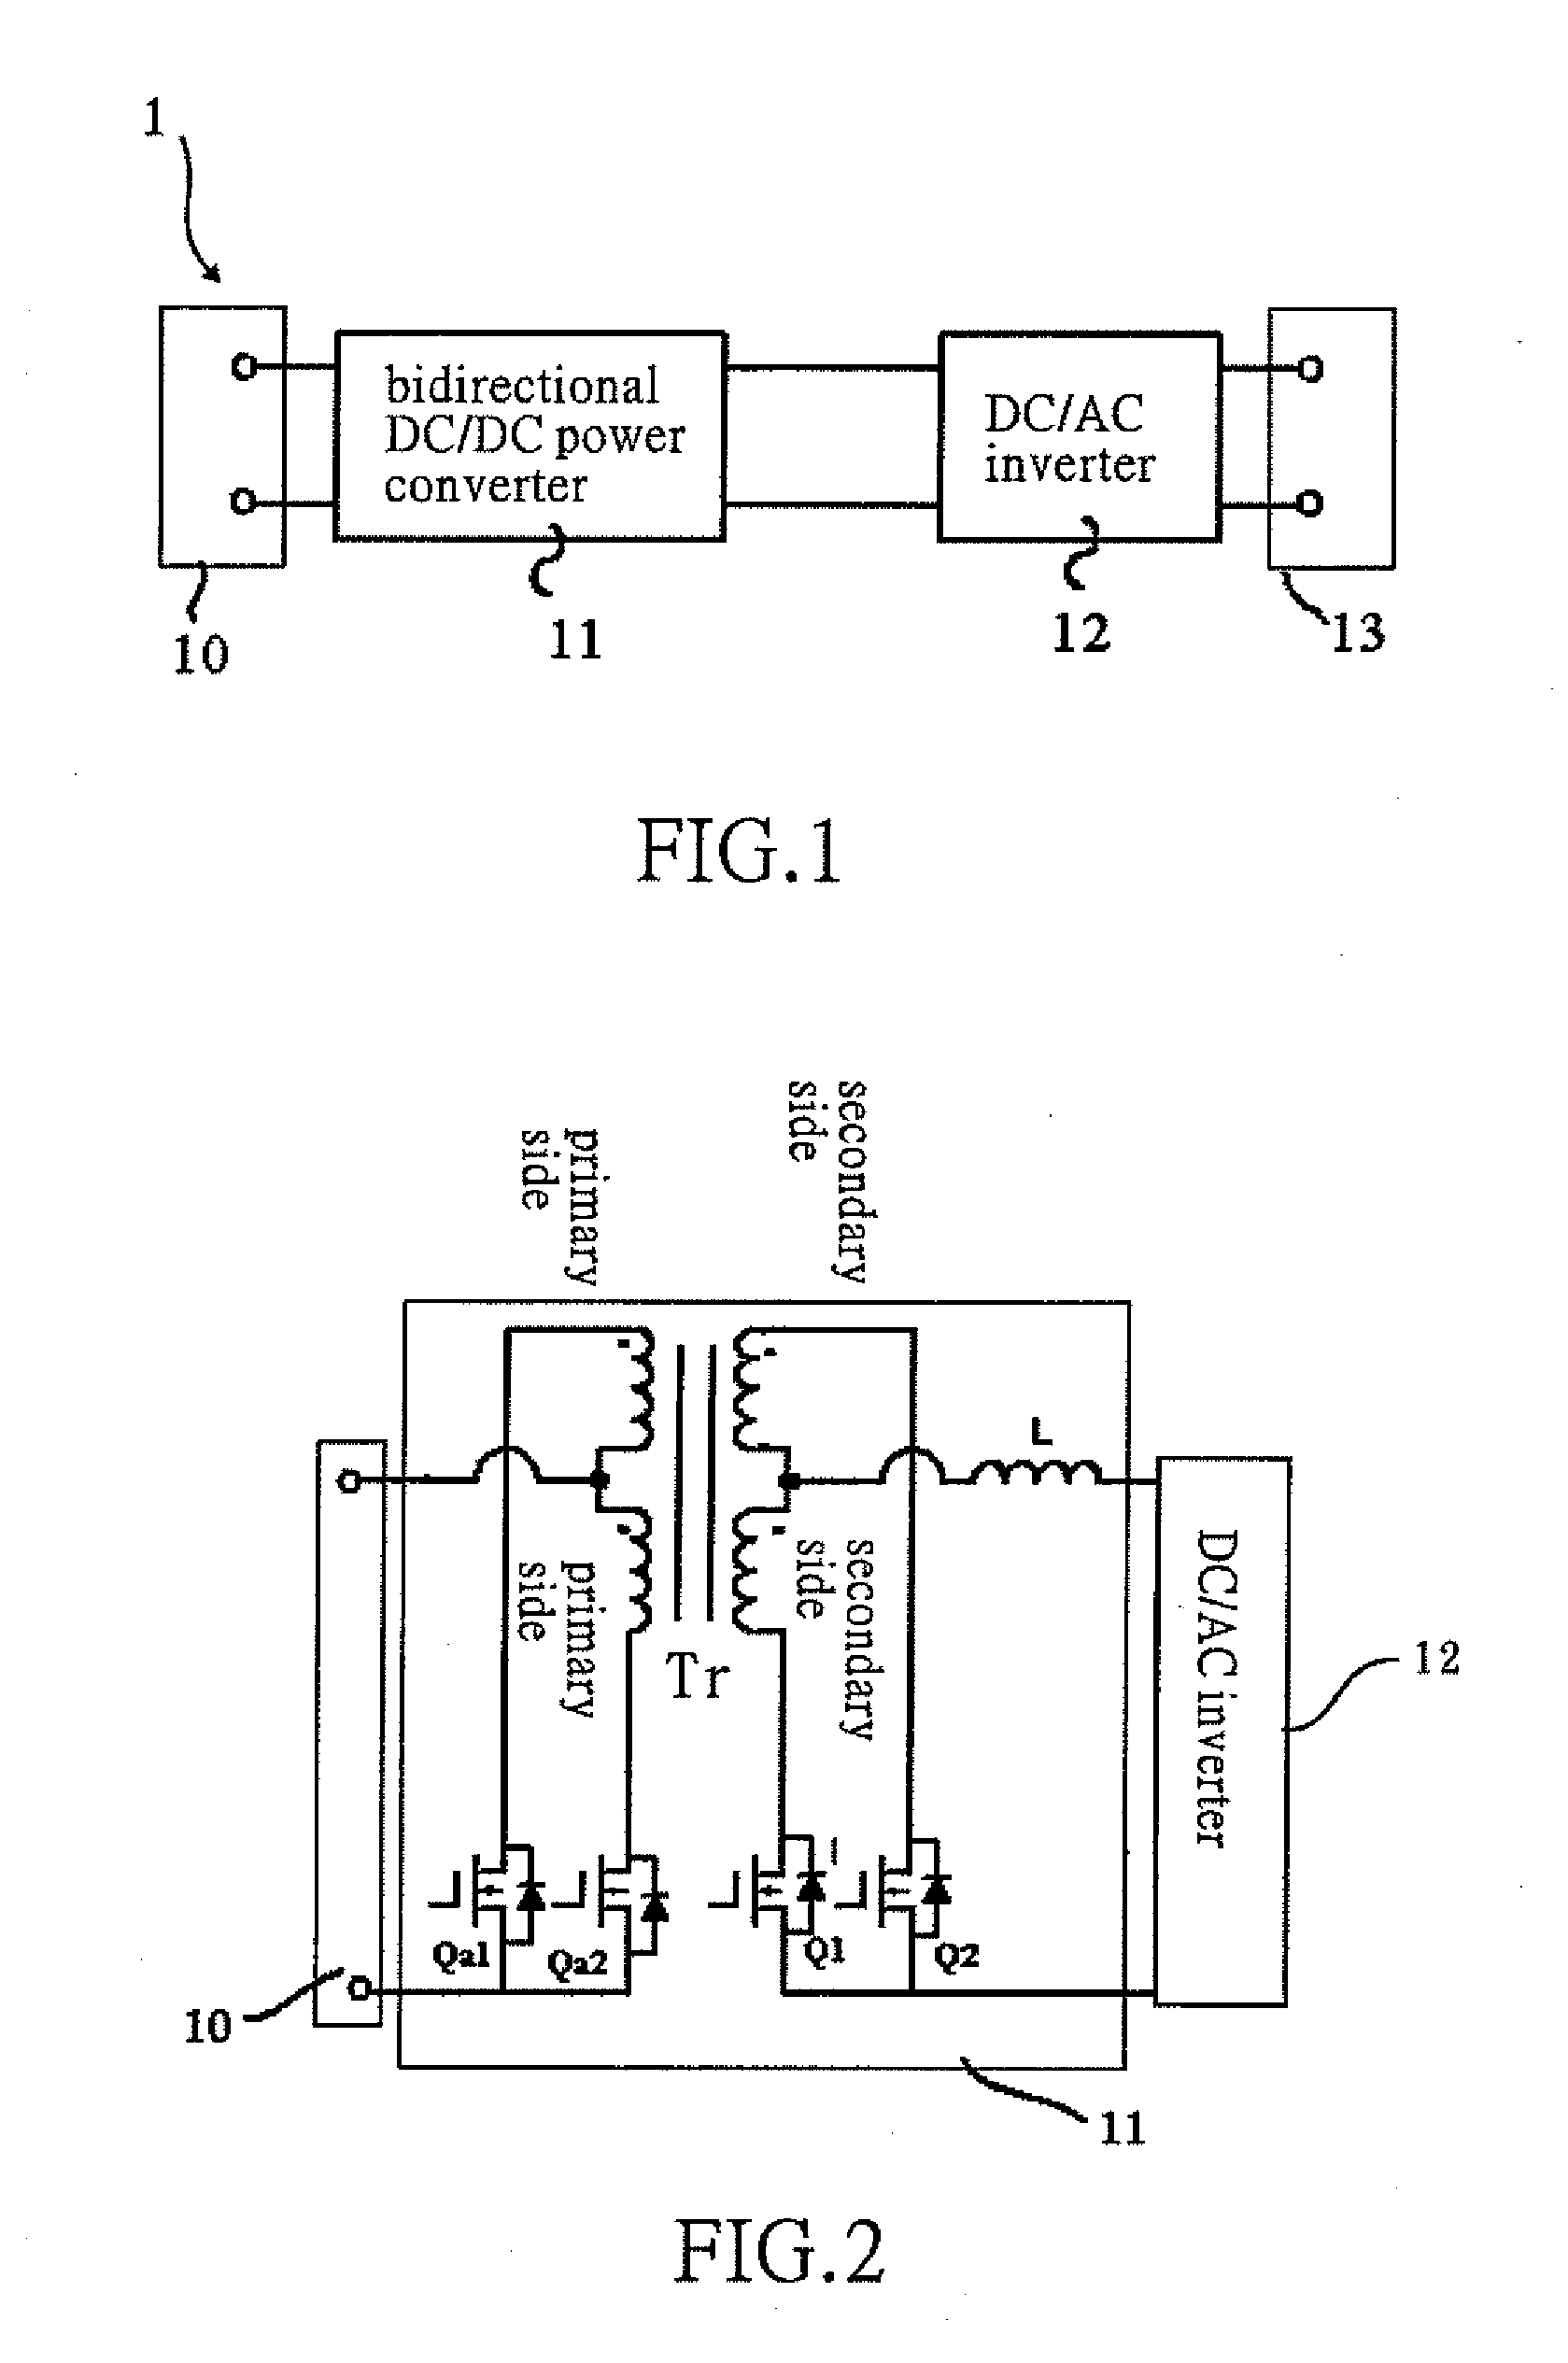 Bidirectional active power conditioner